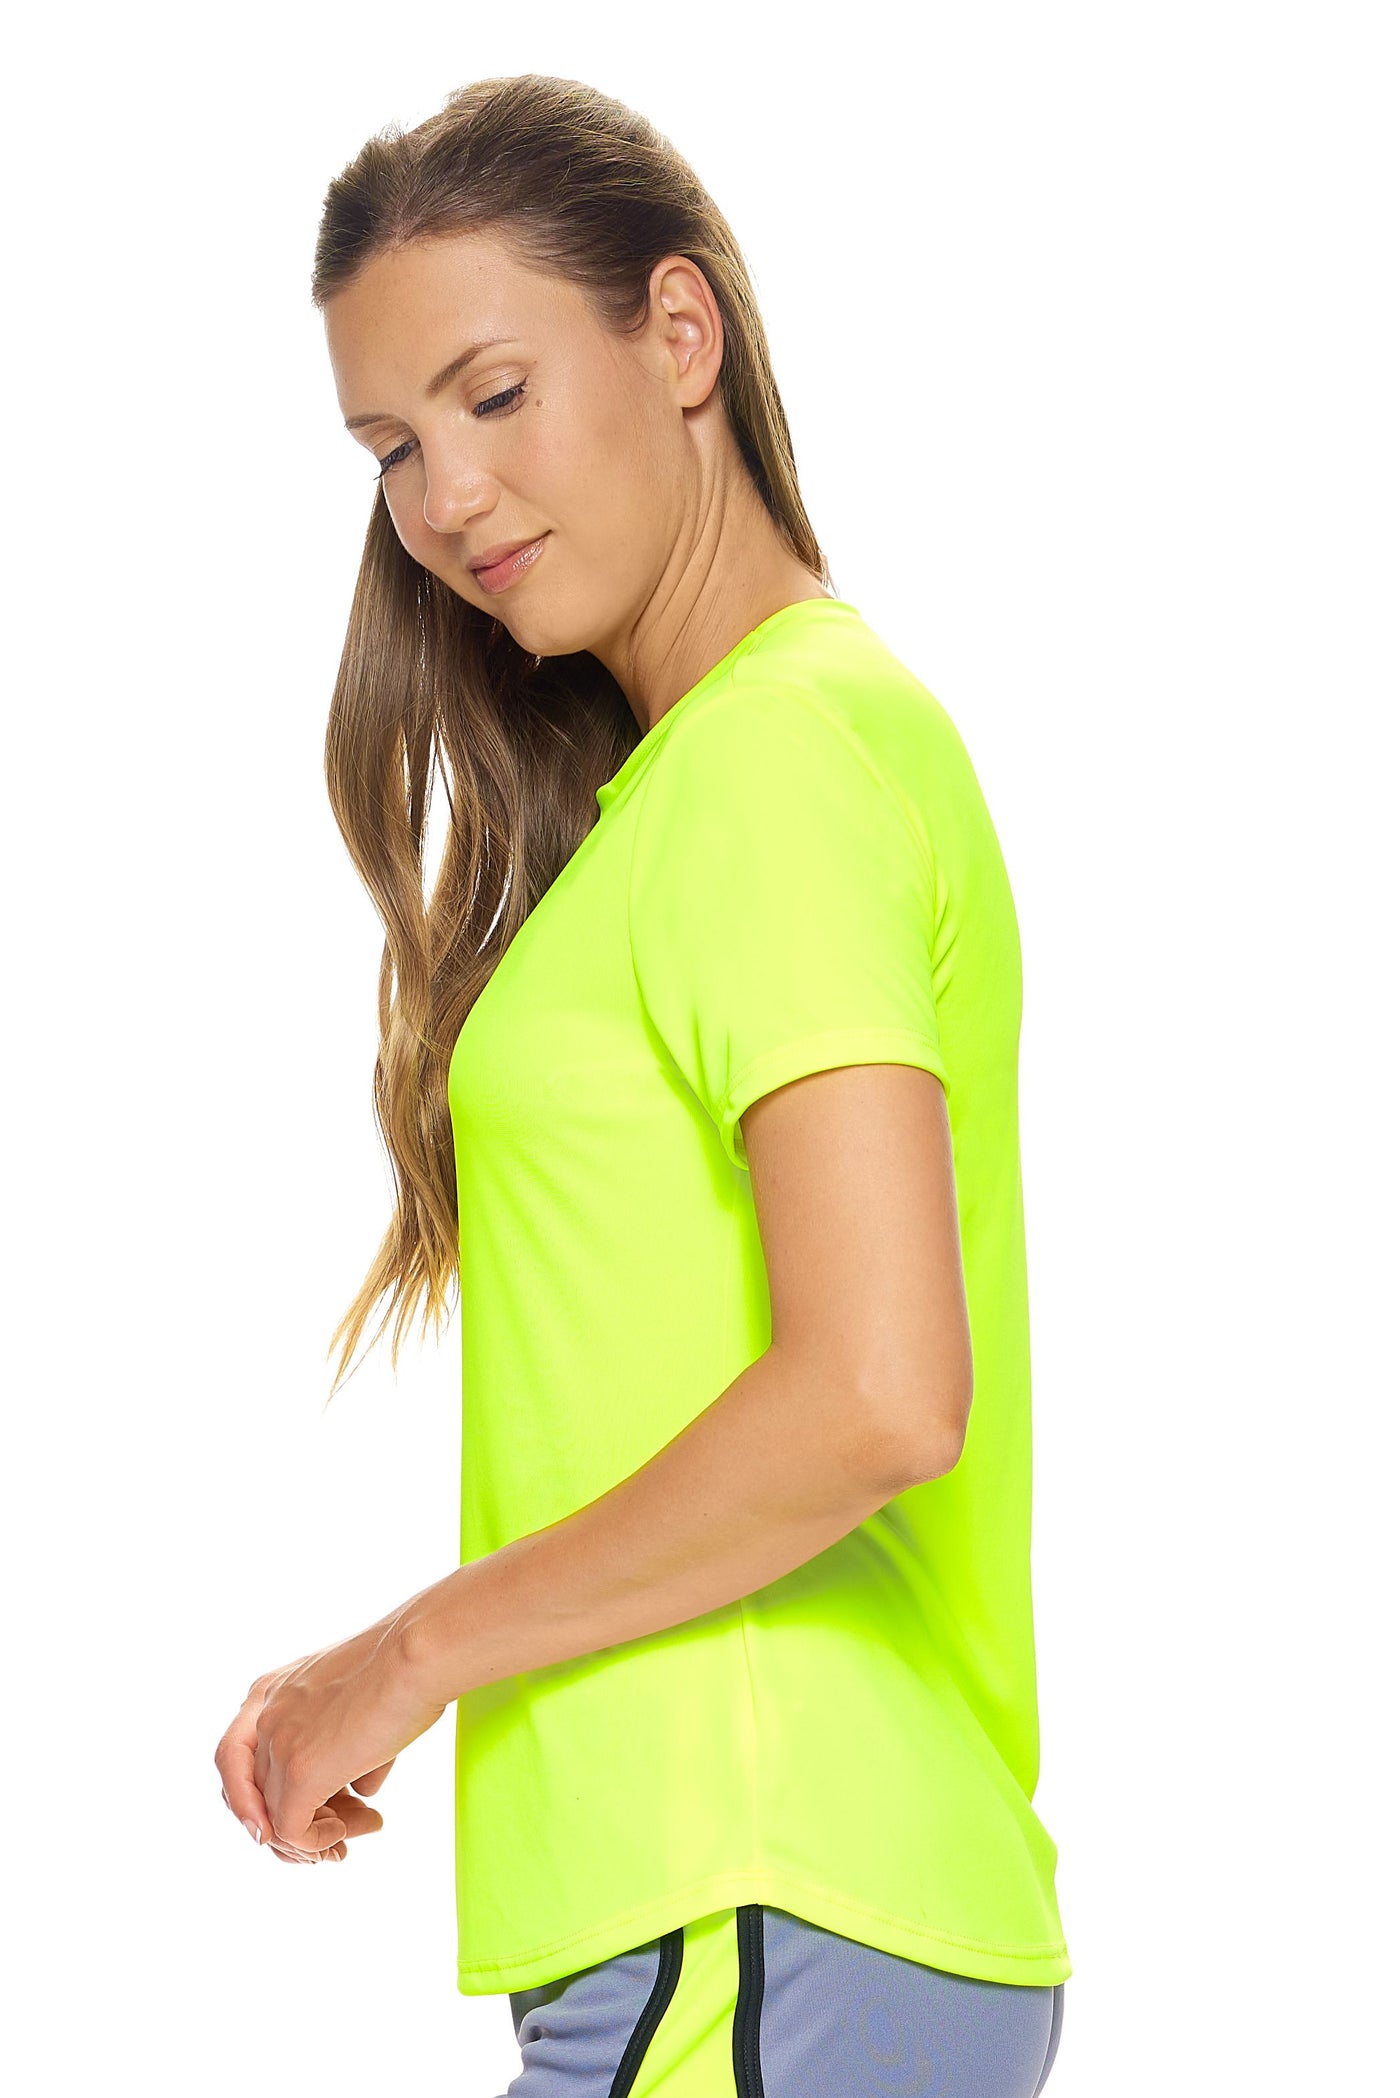 Expert Brand Retail Women's Pk MaX™ Crewneck Expert Tec Tee T-shirt Safety Yellow 2#color_safety-yellow